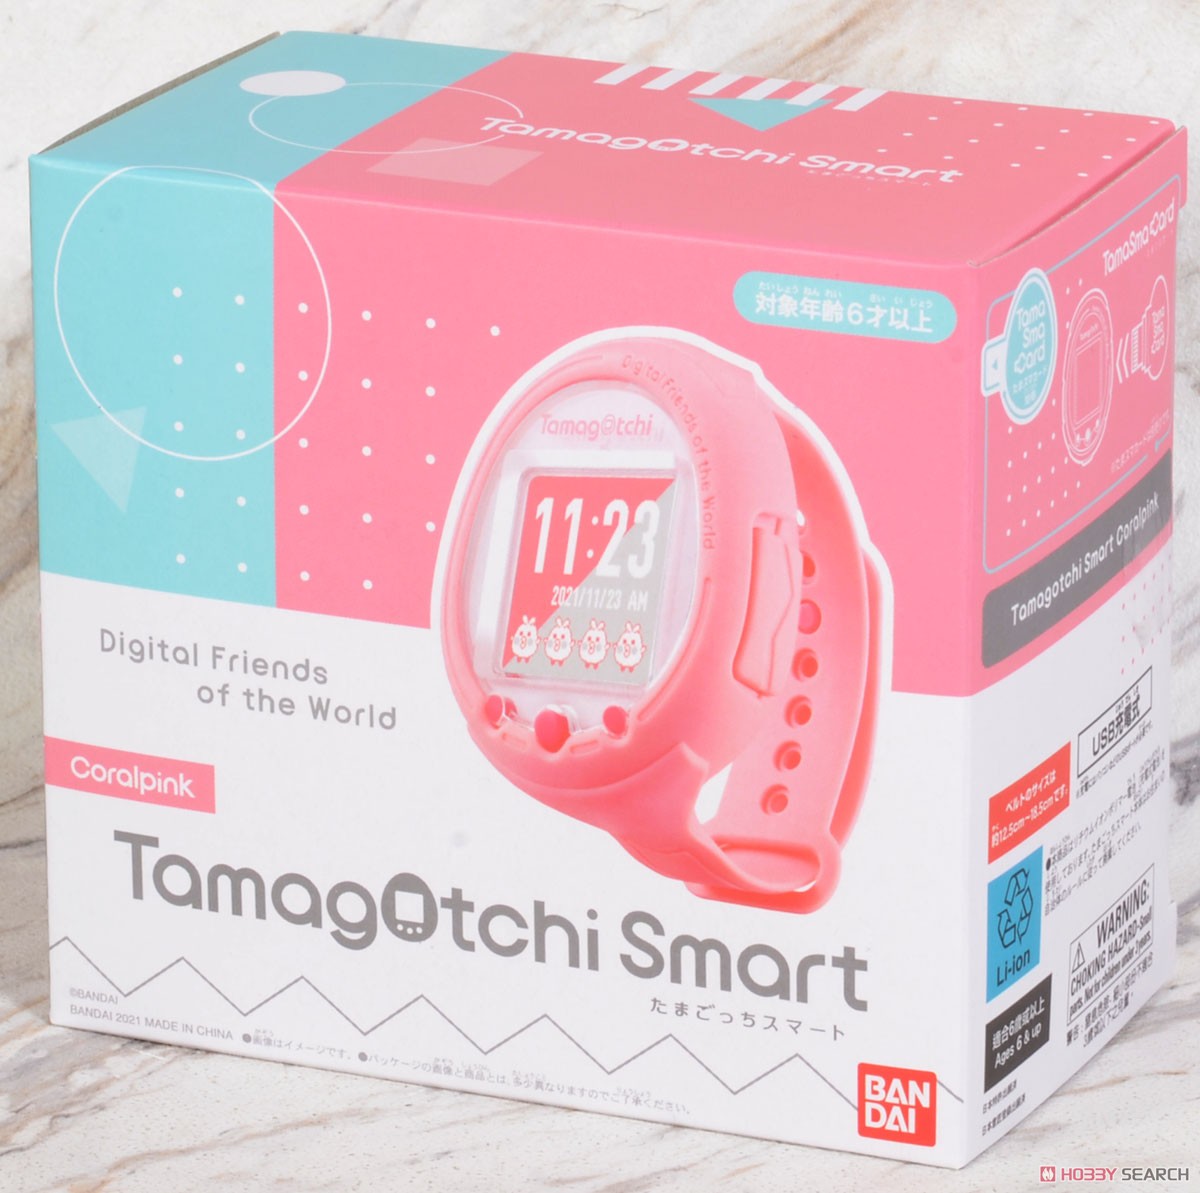 Tamagotchi Smart Coralpink (電子玩具) パッケージ2